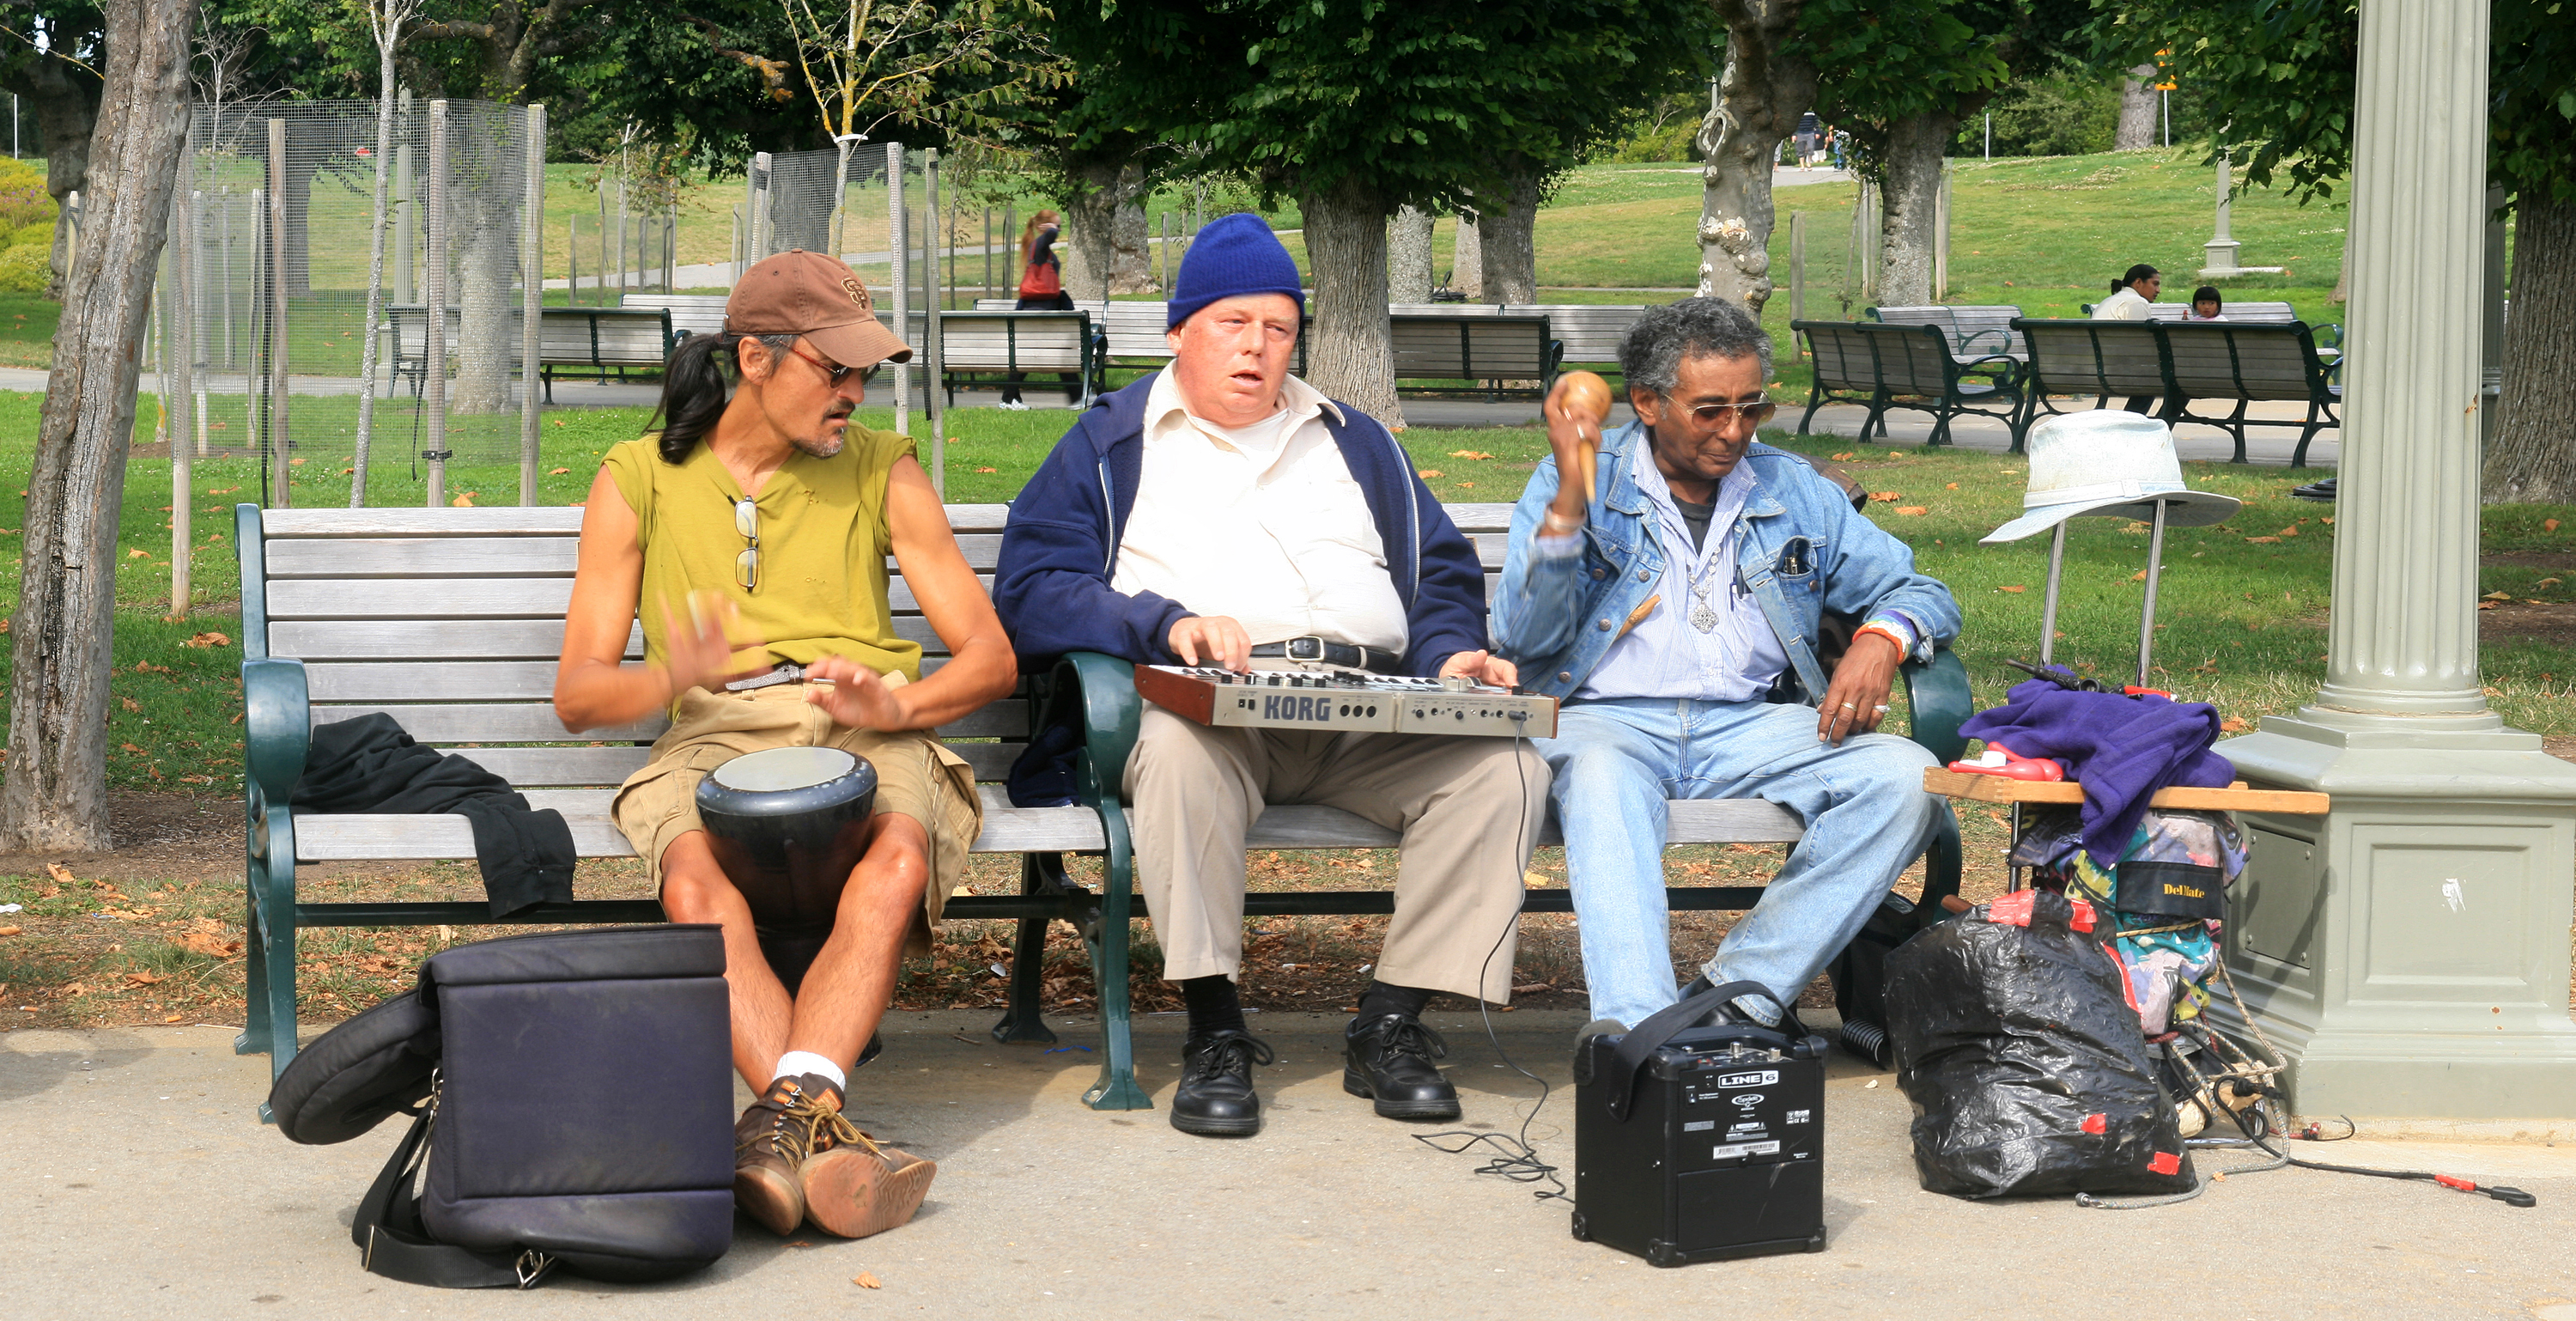 Street musicians in Golden Gate Park